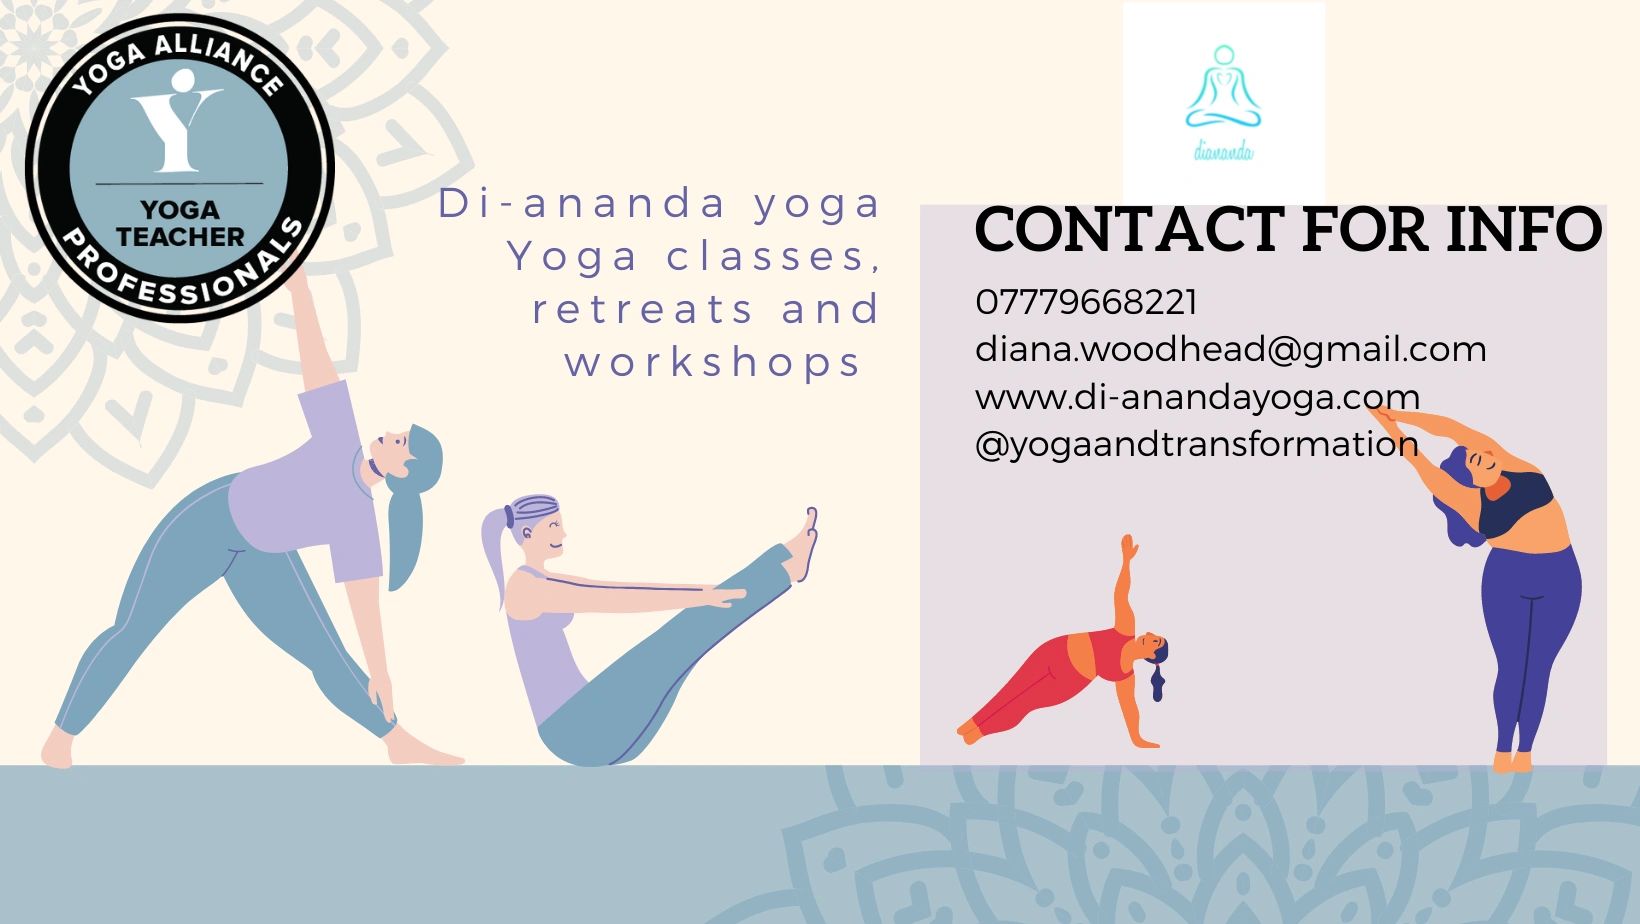 Di-ananda - Yoga, Breathwork, Yoga for Beginners, Yoga